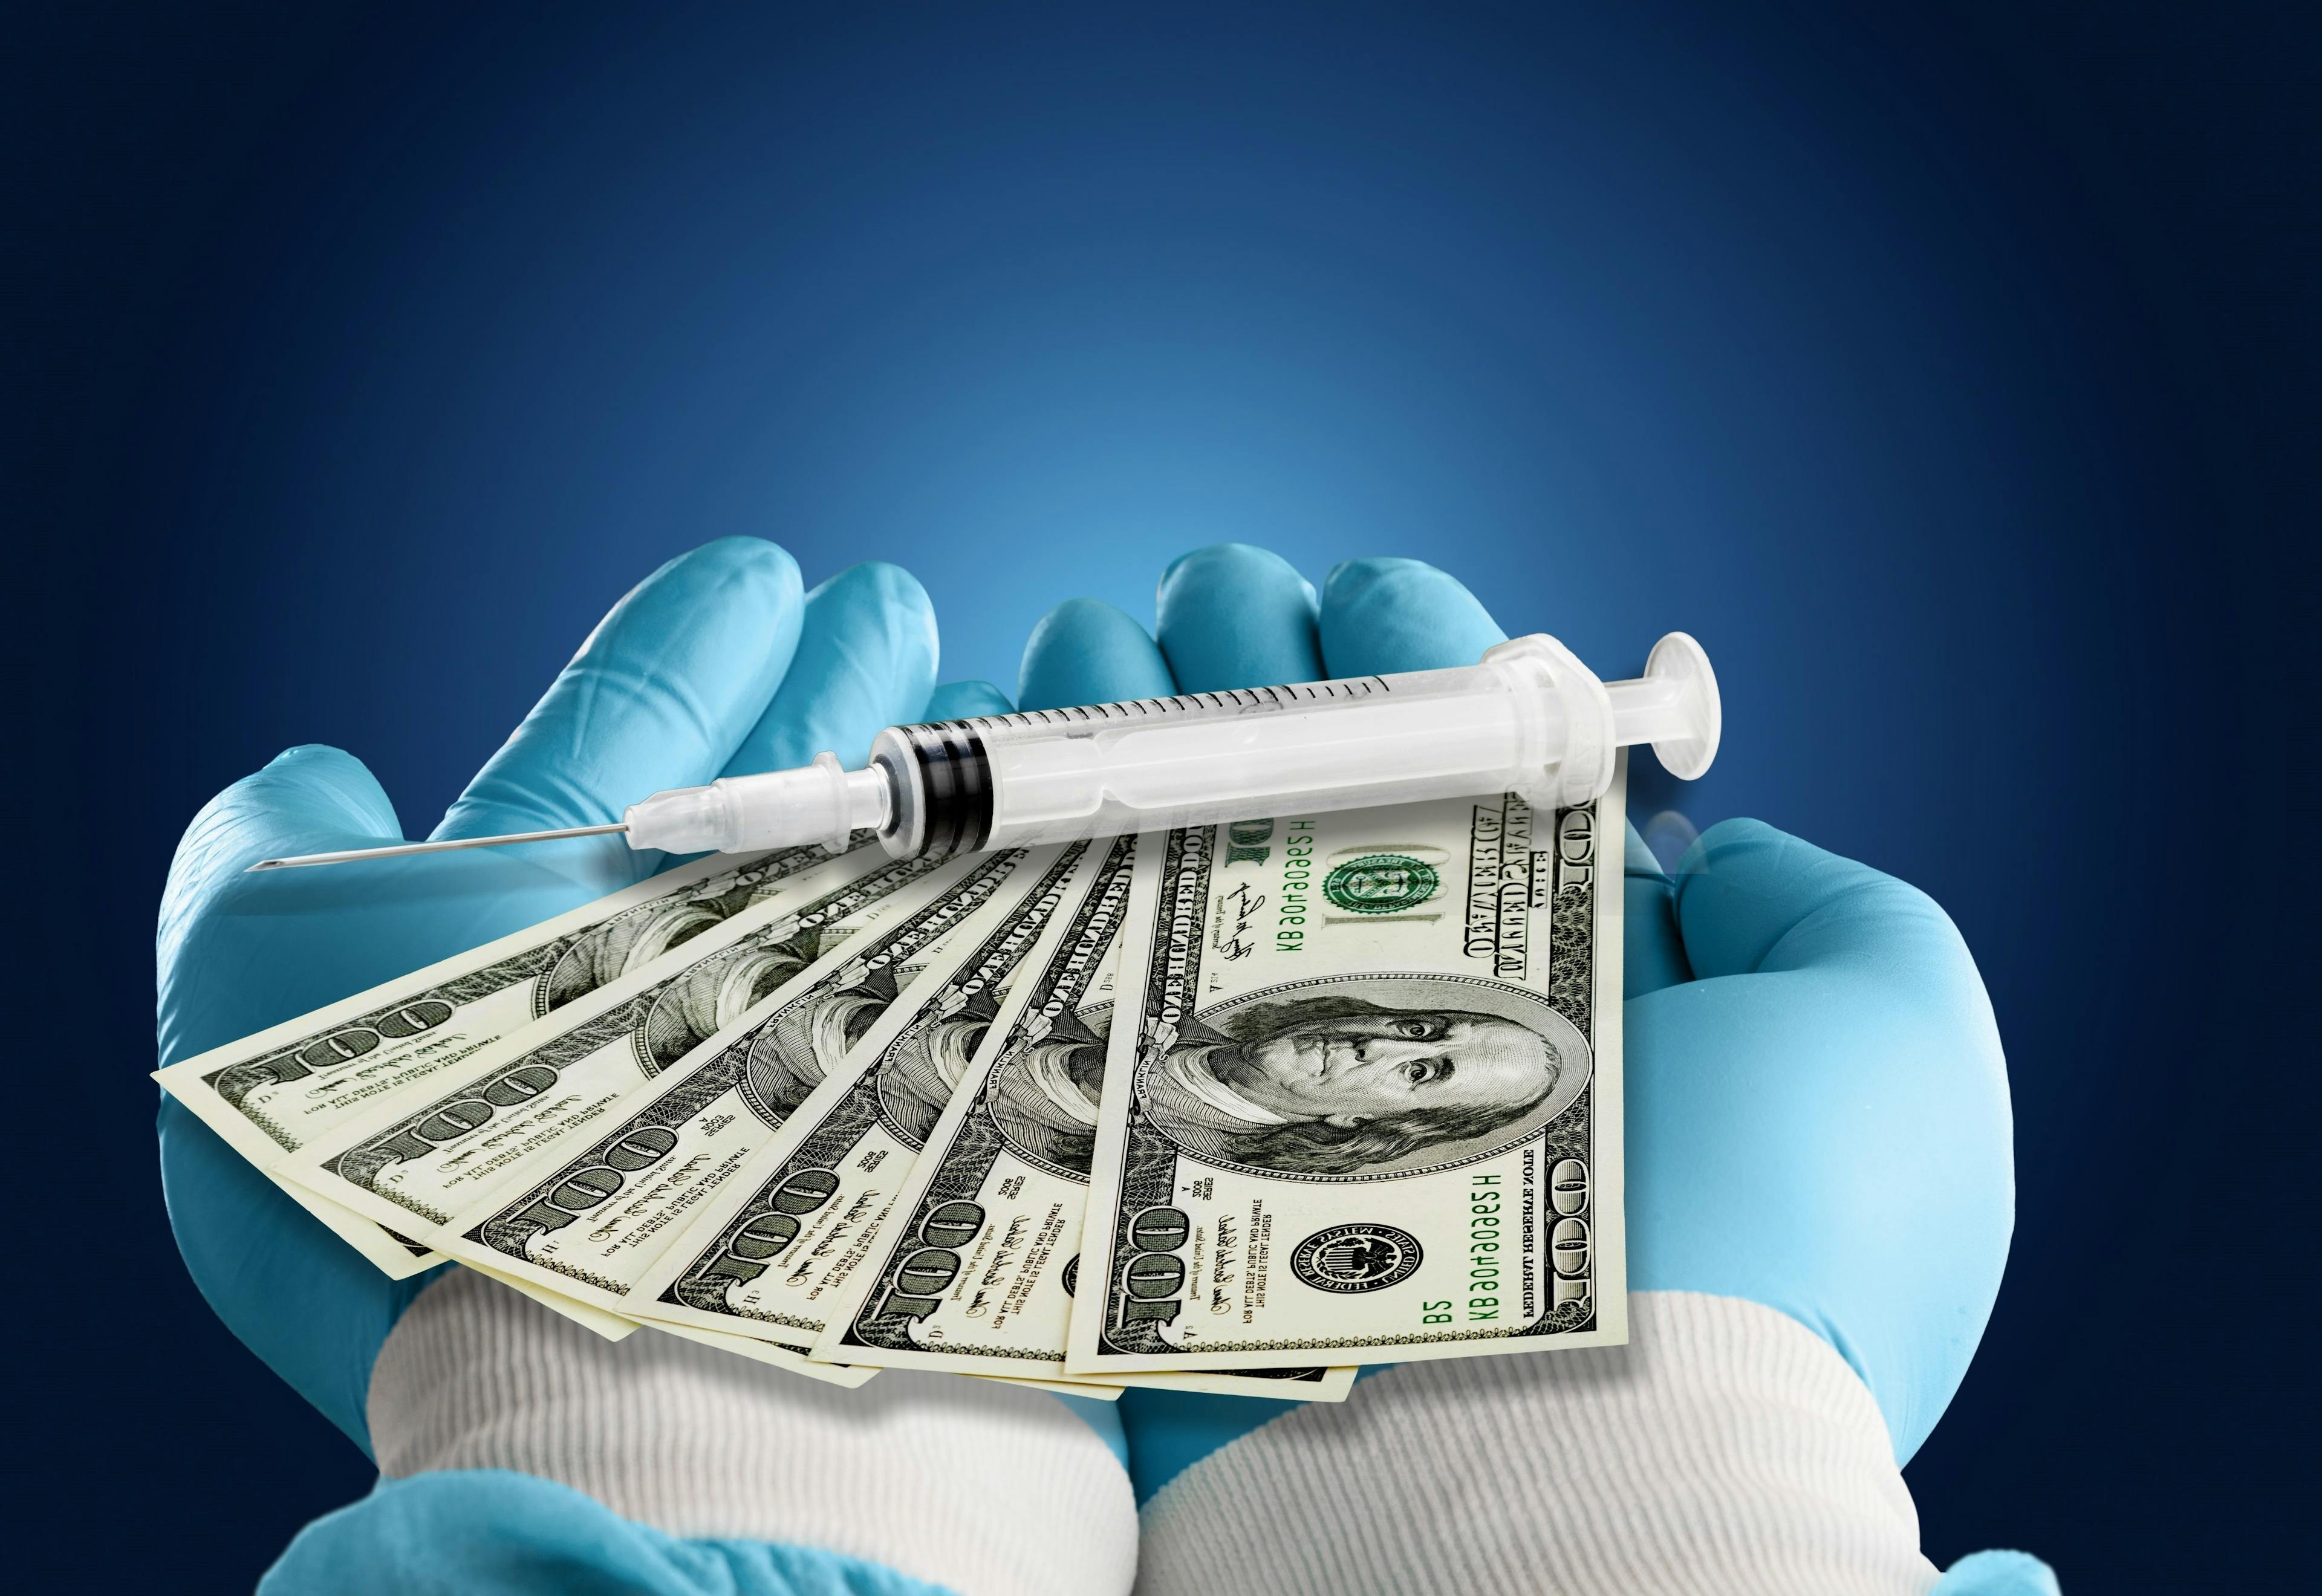 syringe and money | Image credit: BillionPhotos.com - stock.adobe.com